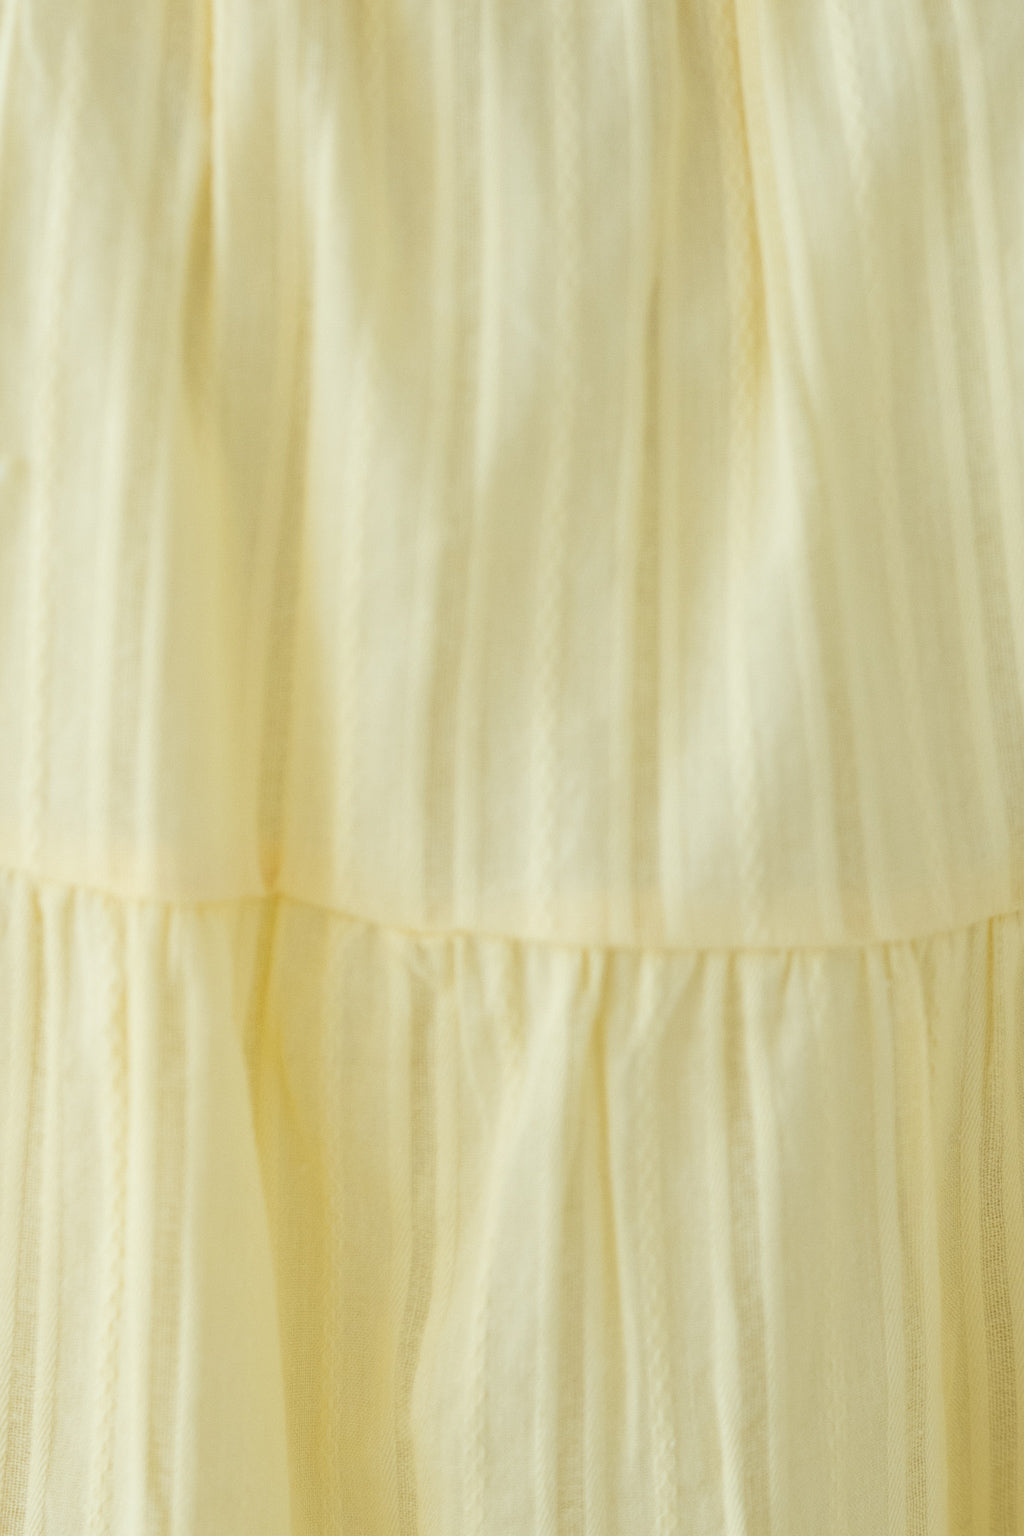 Weitgeschnittenes Kleid (Zitronengelb)